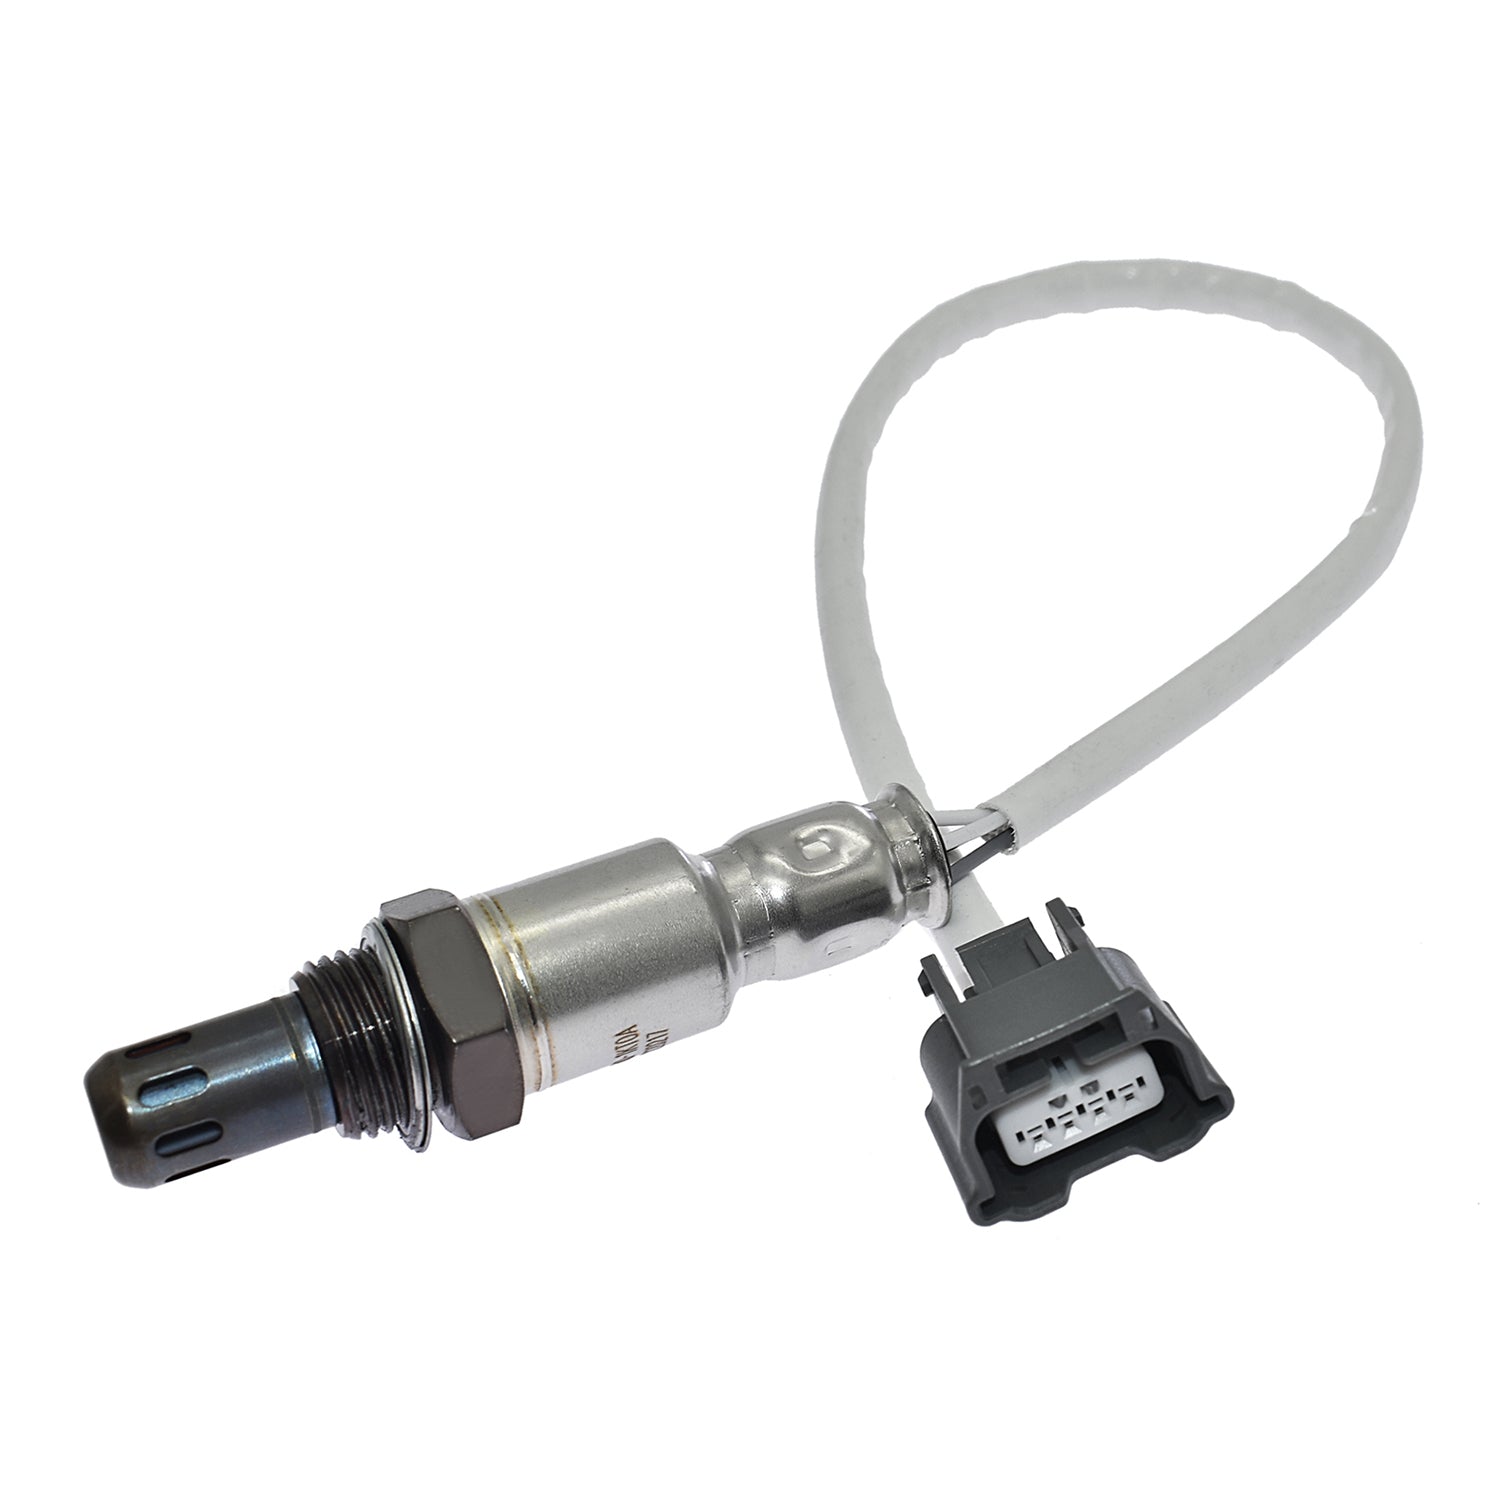 ZNTS Rear Oxygen Sensor For Versa Note 1.6L Infiniti M35h Q50 Q70 3.5L 226A0-1KT0A 03768964